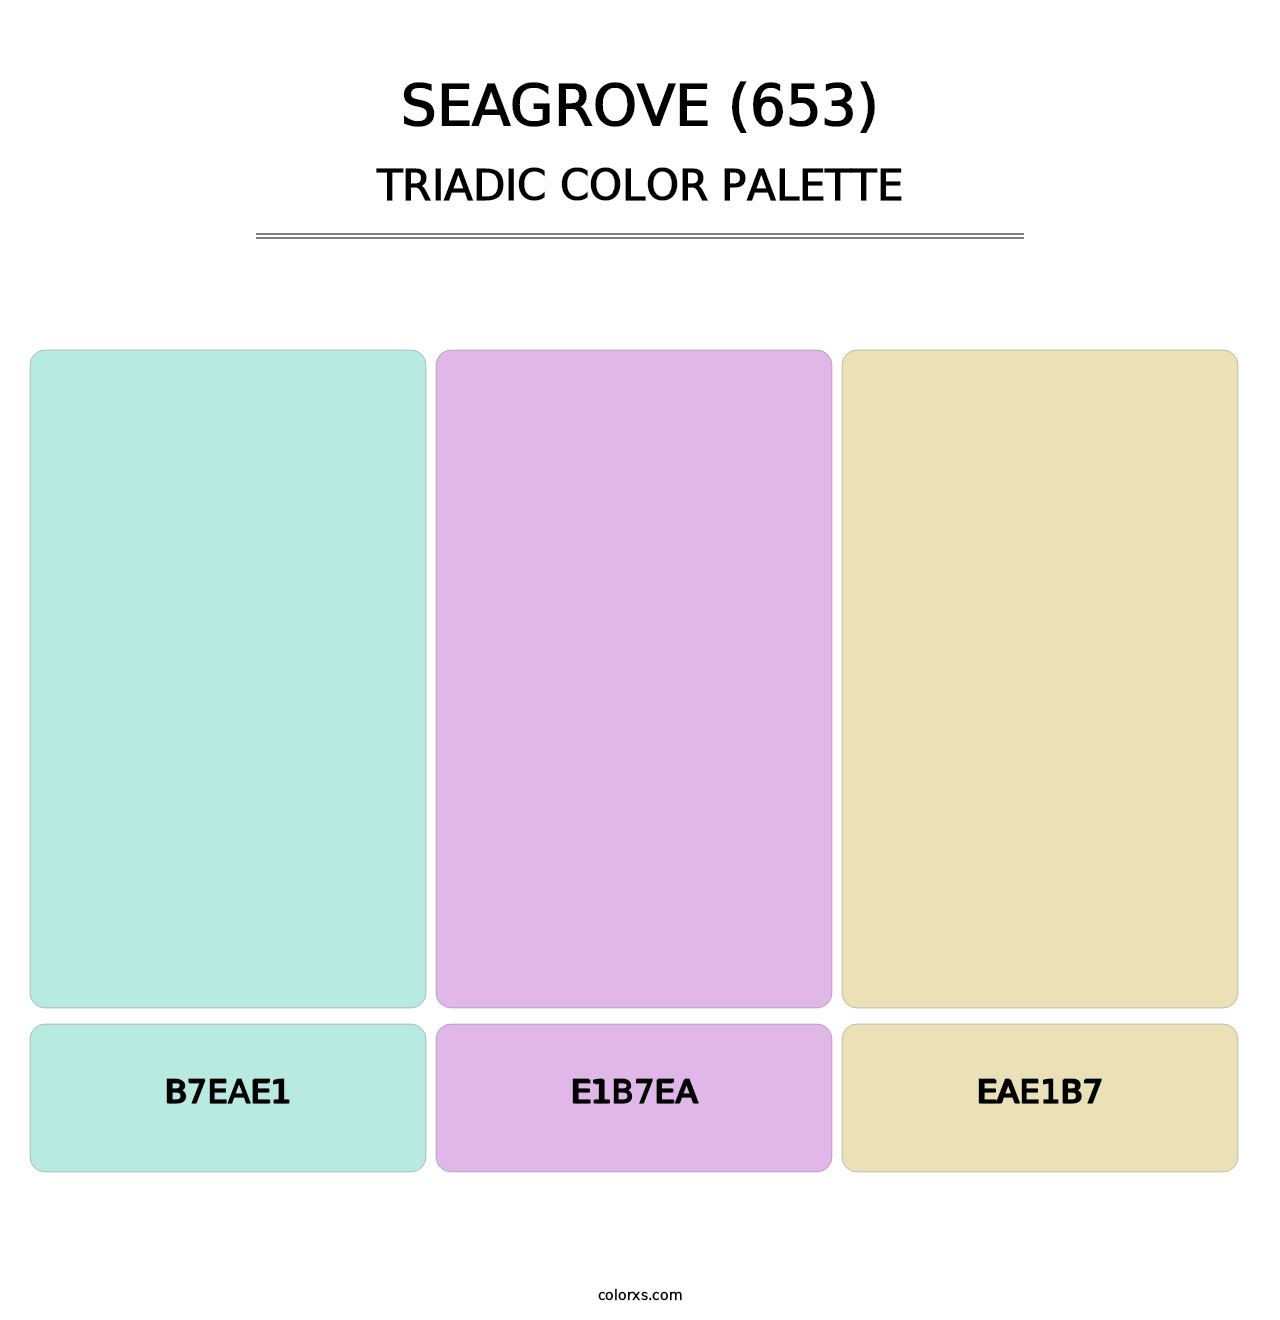 Seagrove (653) - Triadic Color Palette